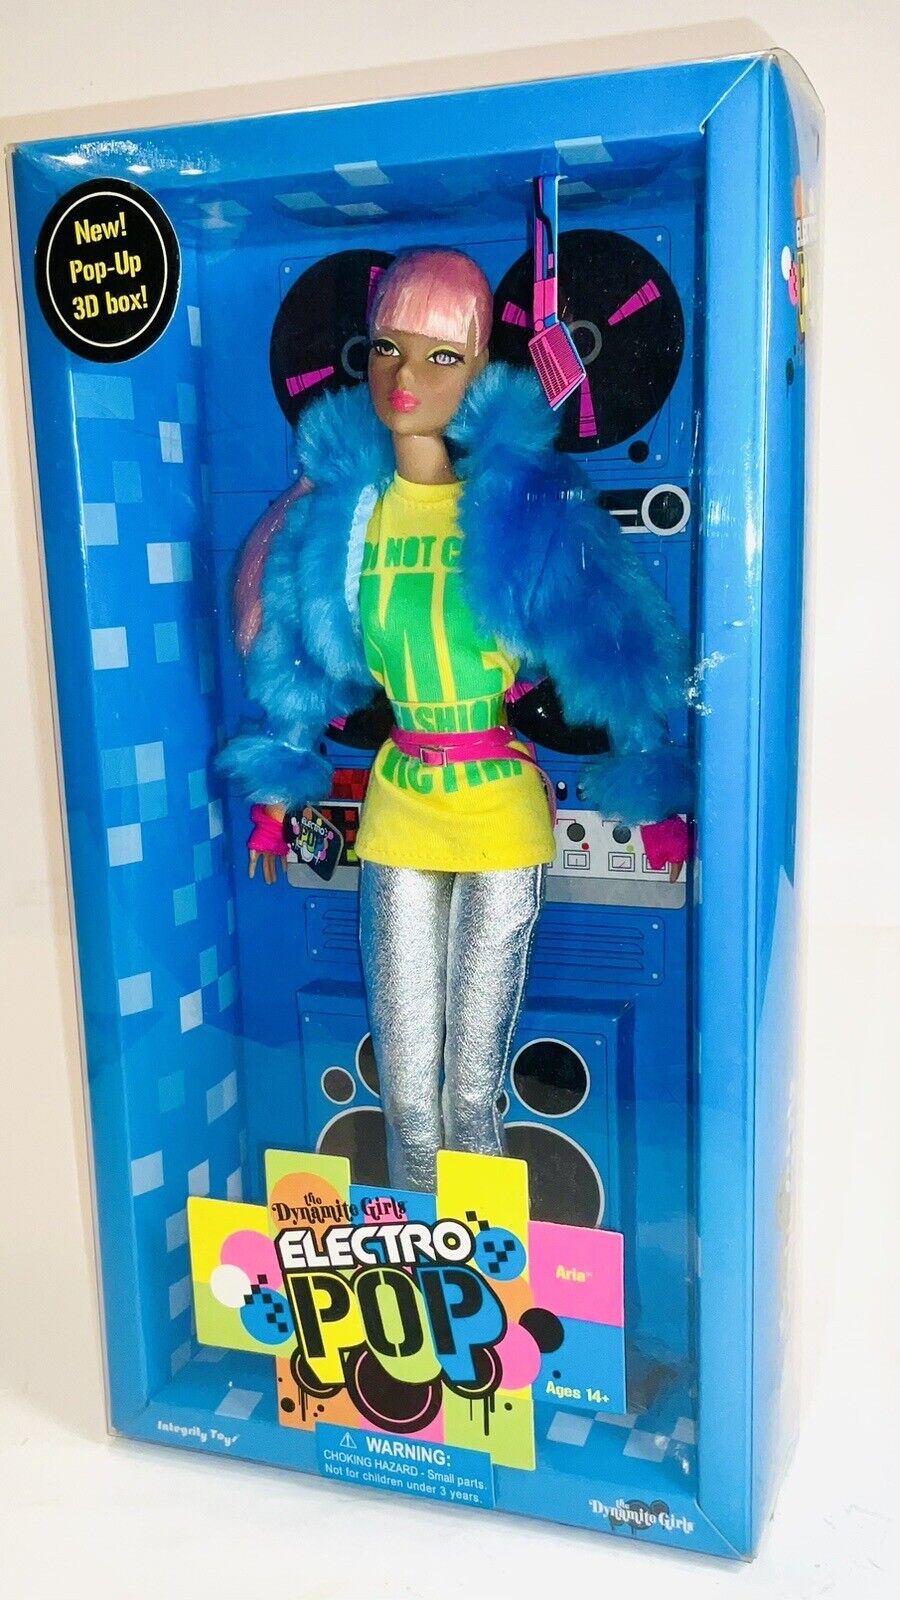 Aria Electro Pop - 2009 Dynamite Girls - Integrity Toys - Brand New